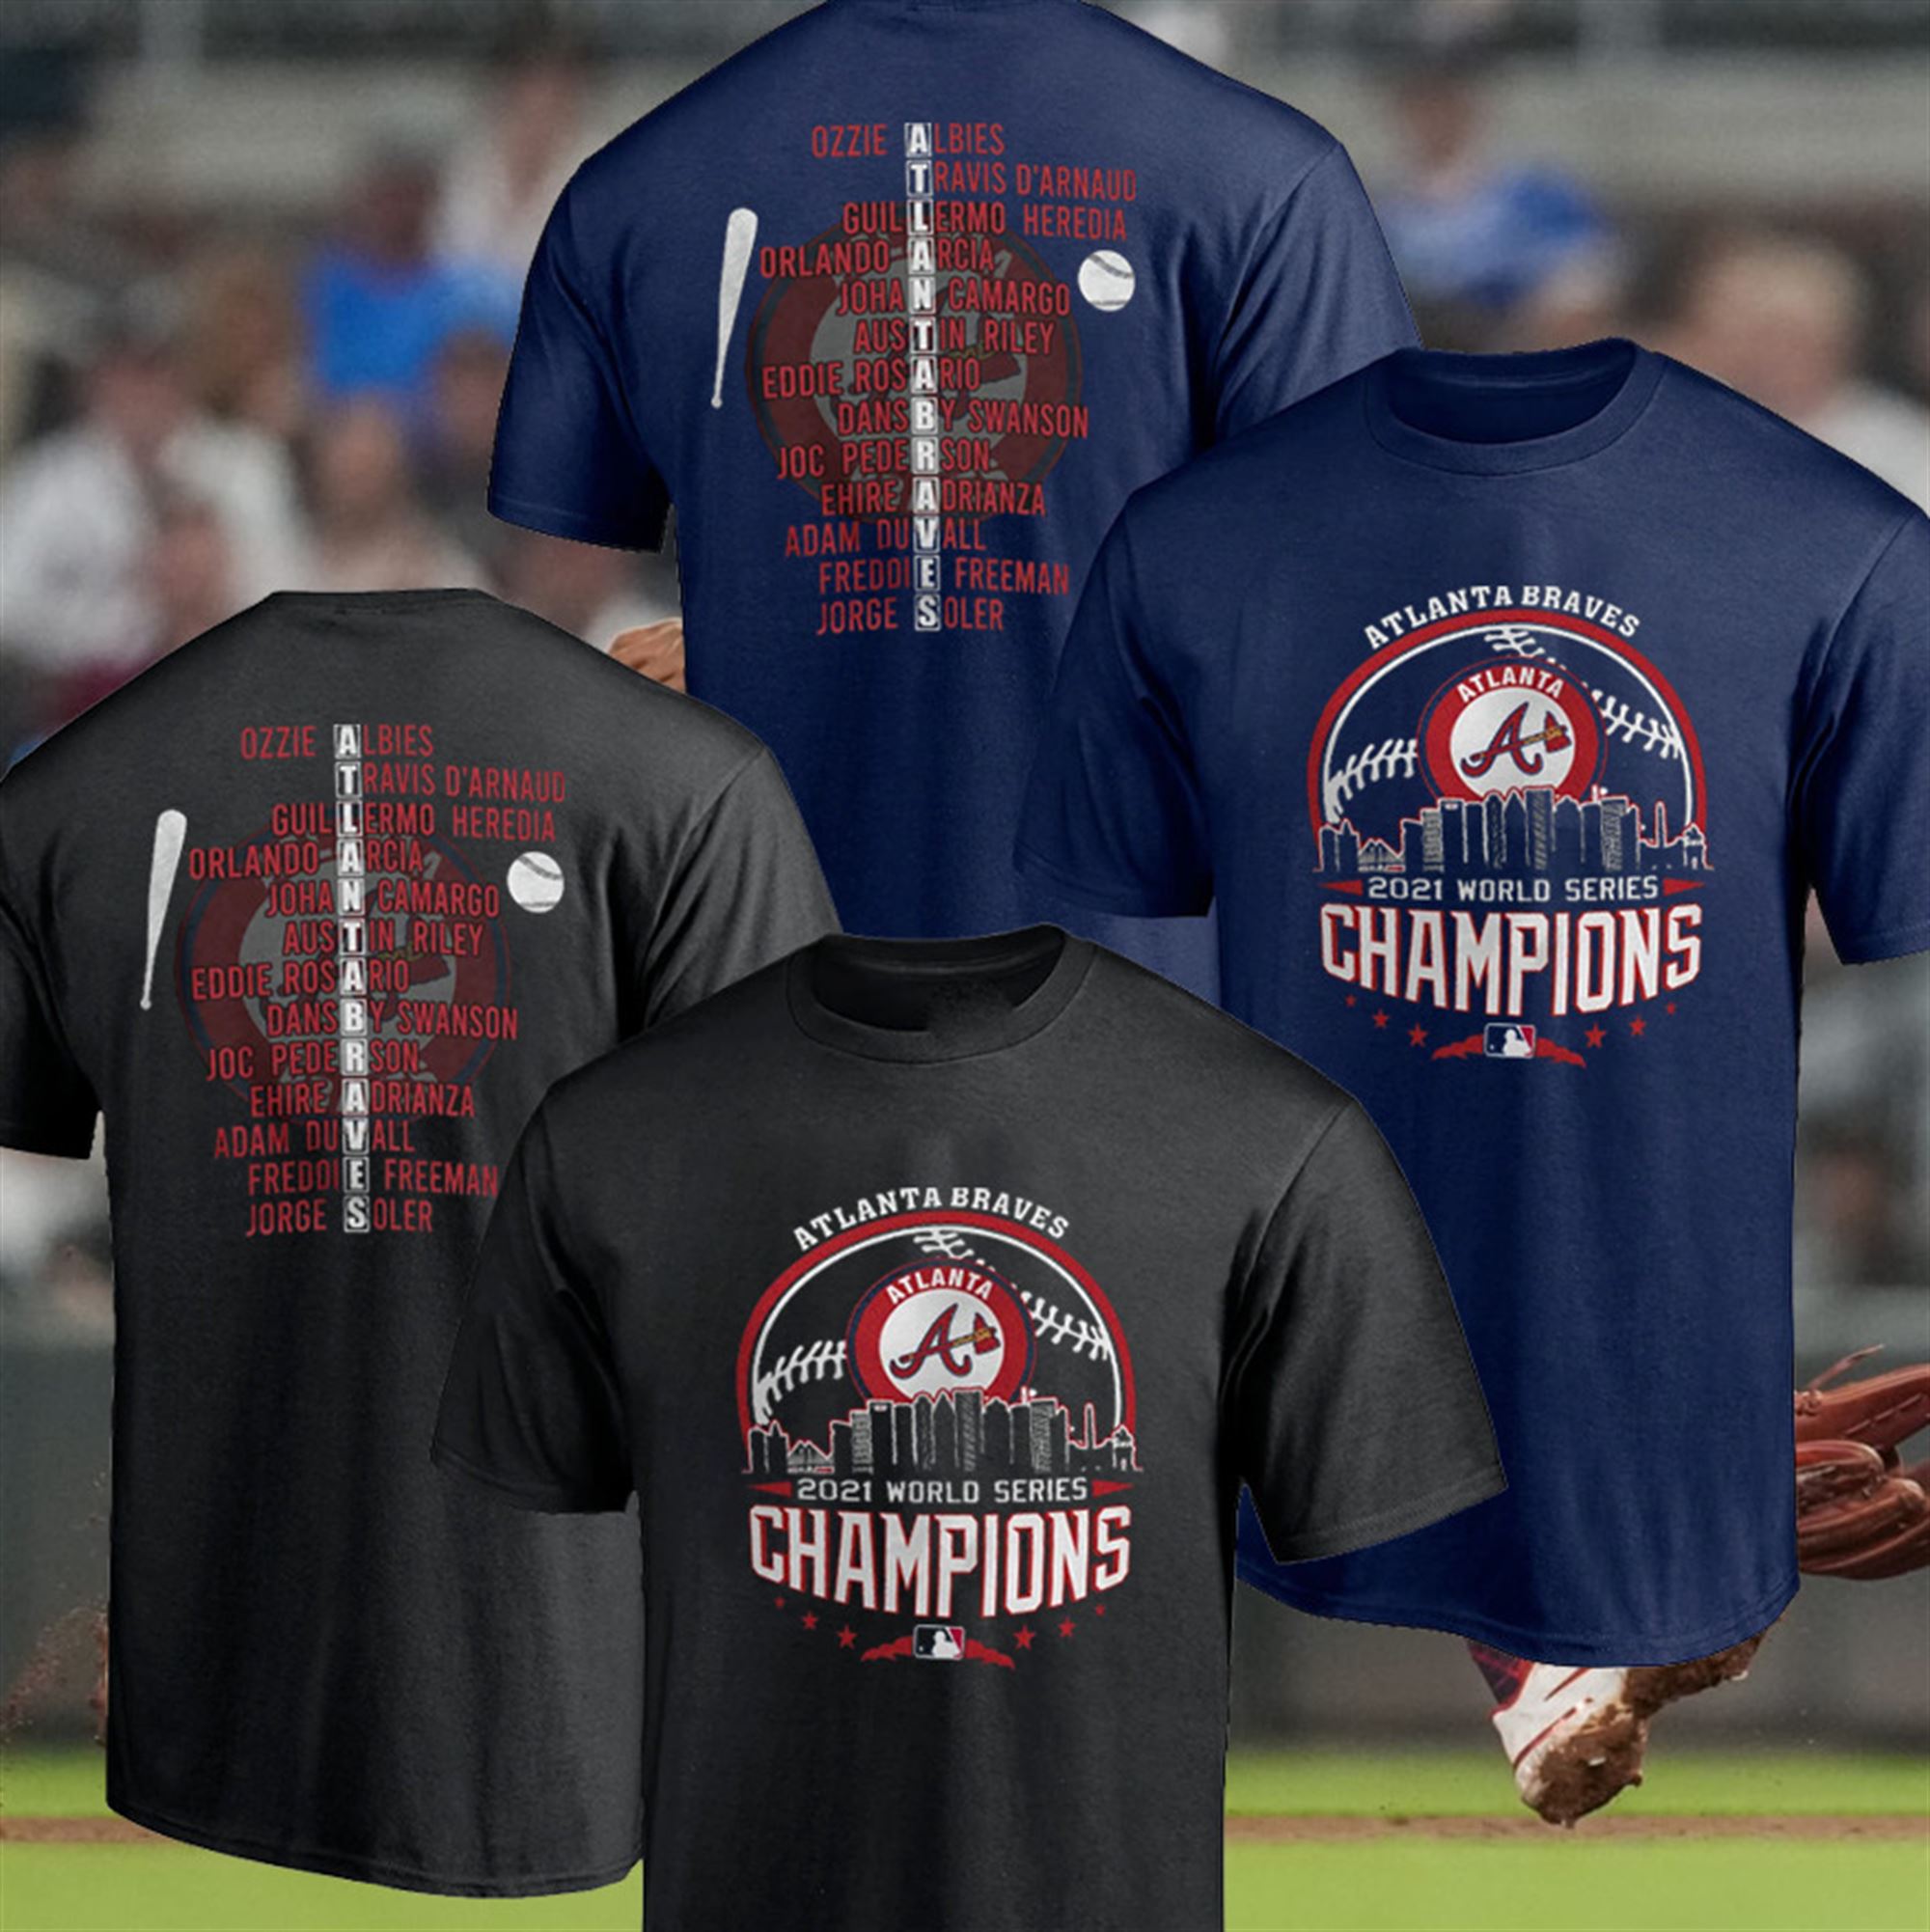 Atlanta Braves Win Mlb World Series Champs 2021 Team List T-shirt S-5xl